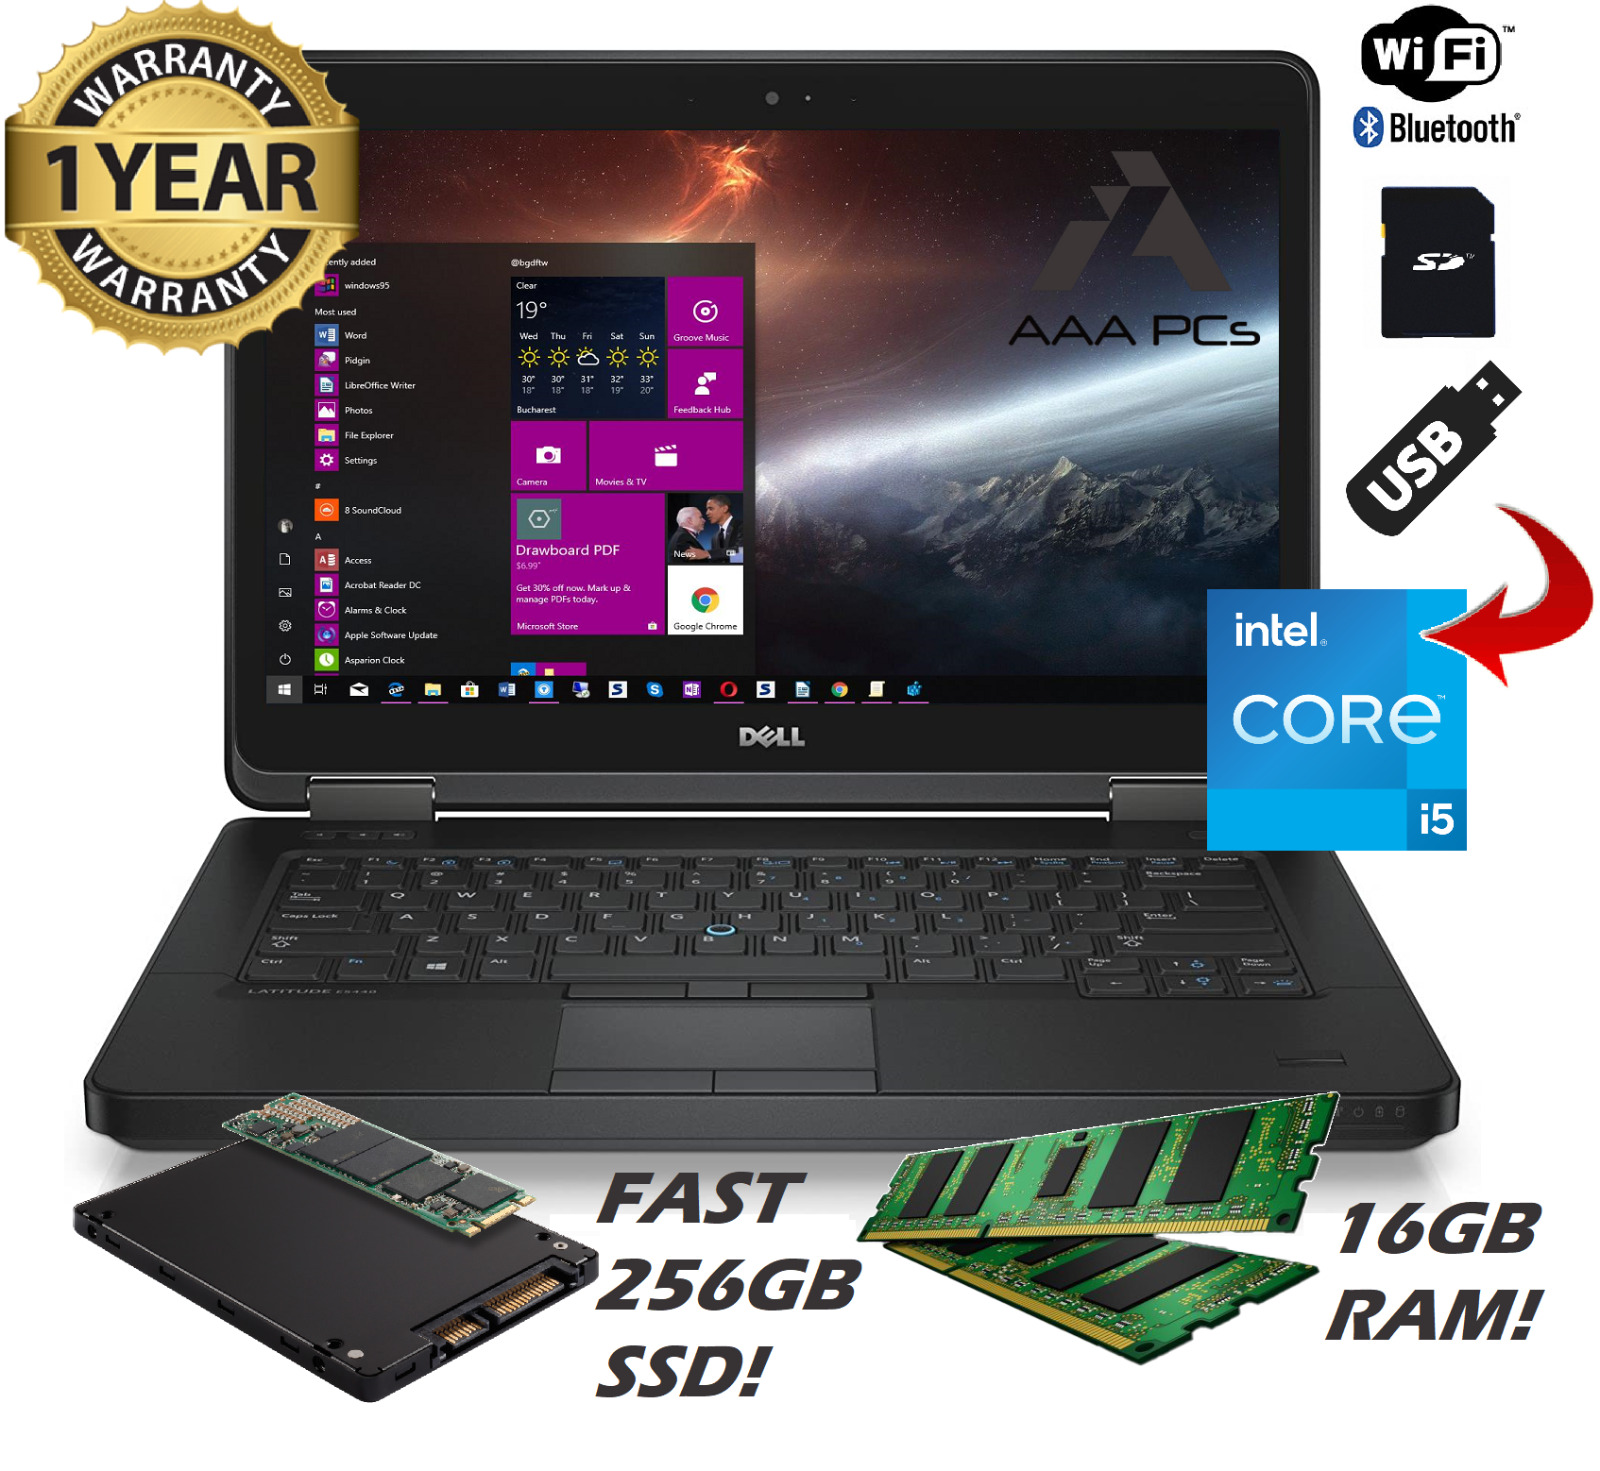 Dell Latitude Business Light Gaming Laptop Win 10 Intel Core i5 16GB RAM 256 SSD